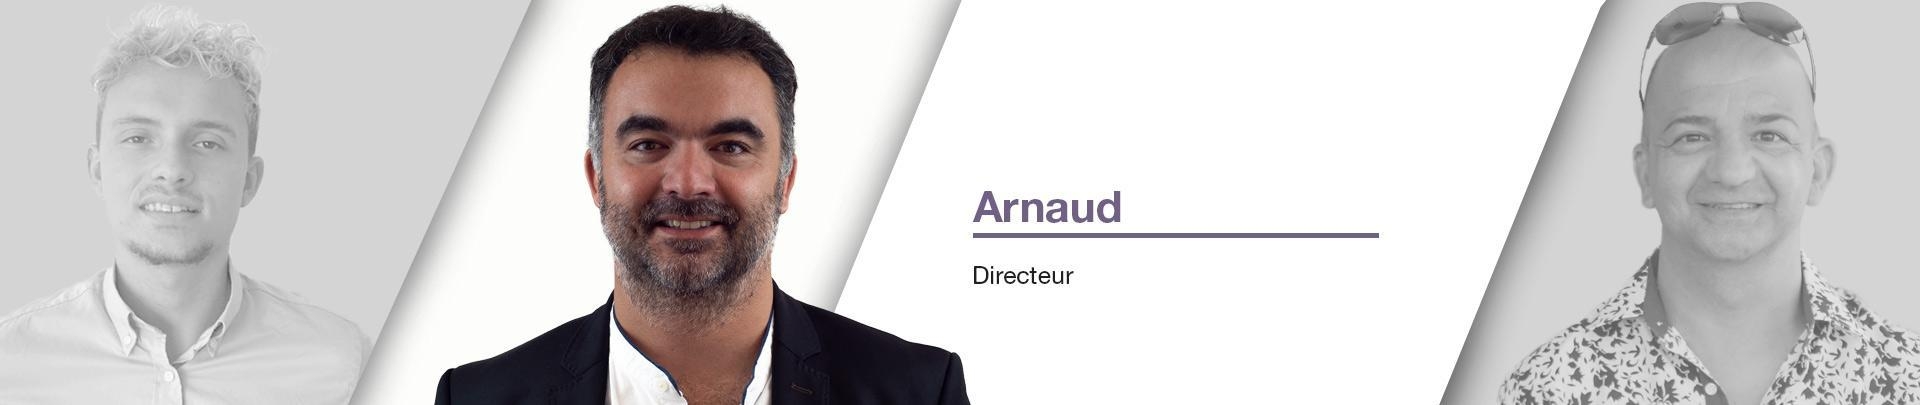 Arnaud  - Directeur